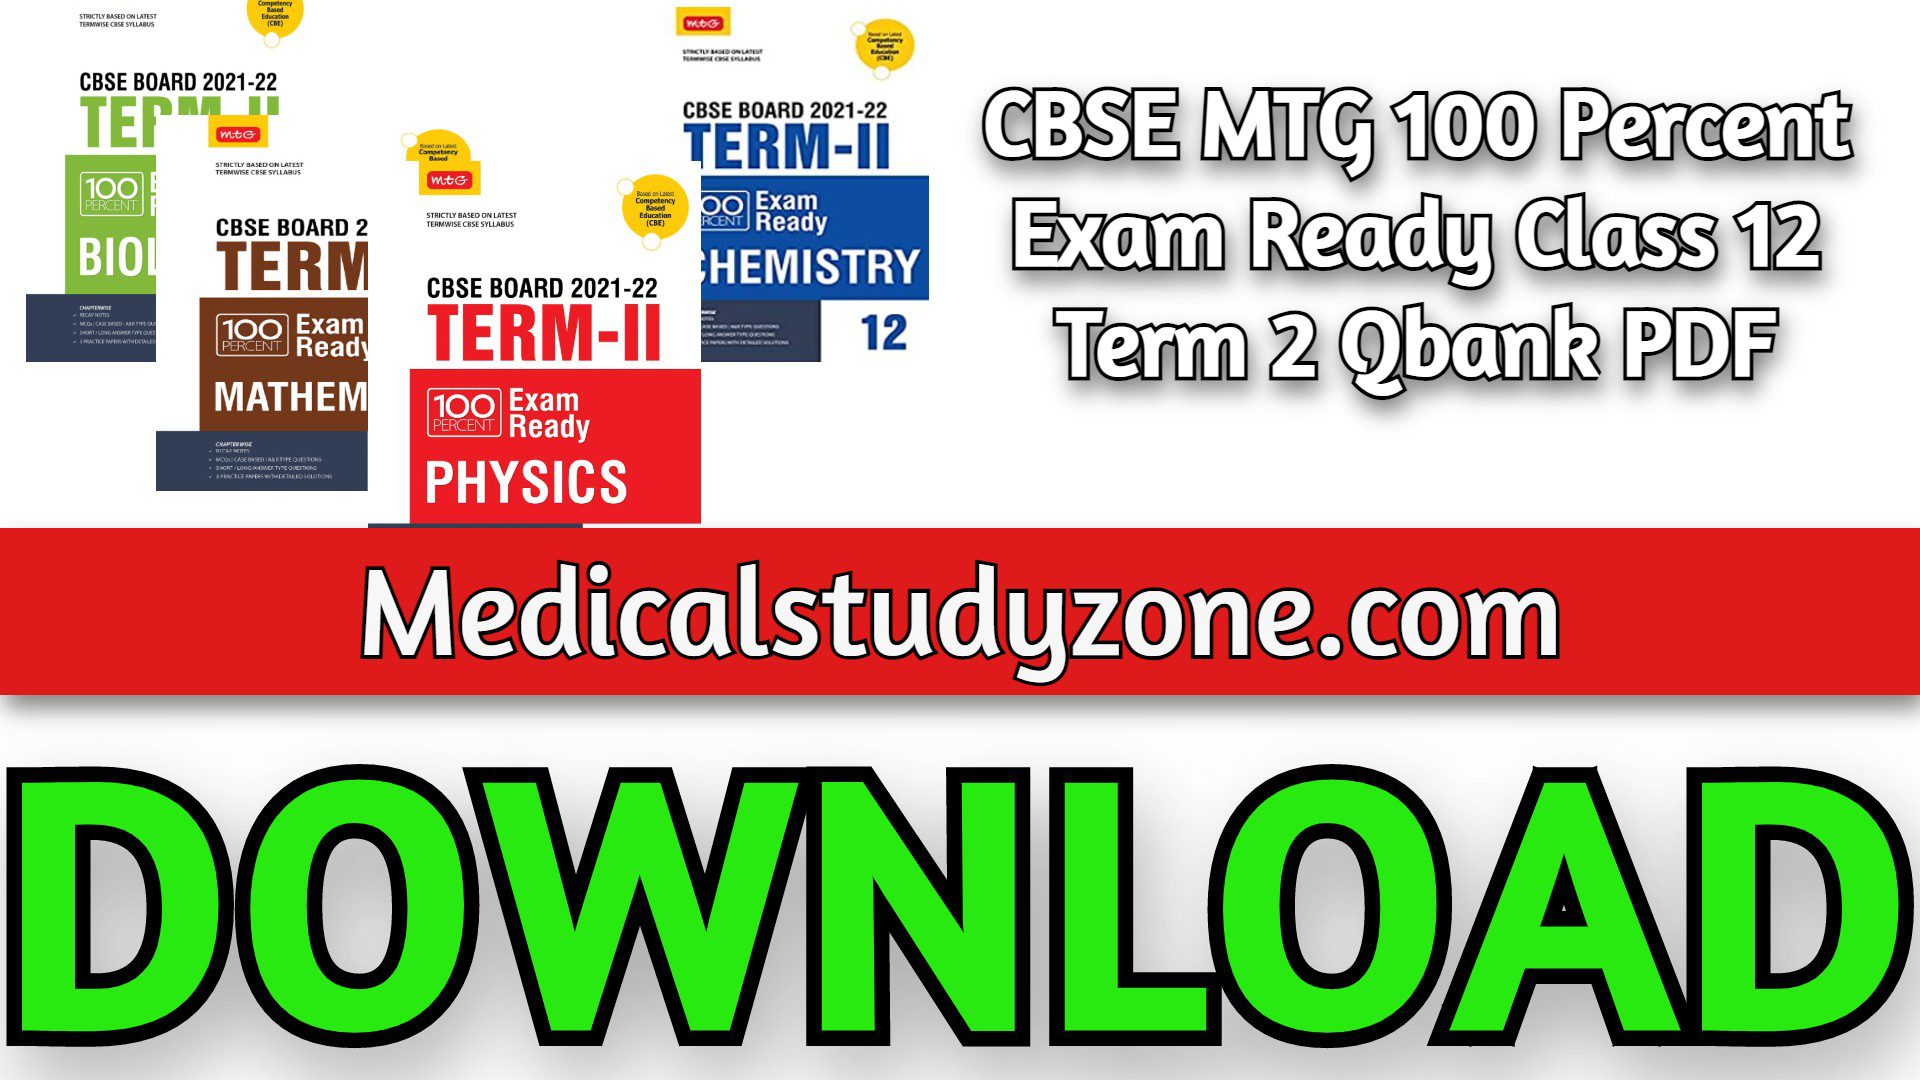 Download CBSE MTG 100 Percent Exam Ready Class 12 Term 2 Qbank PDF Free